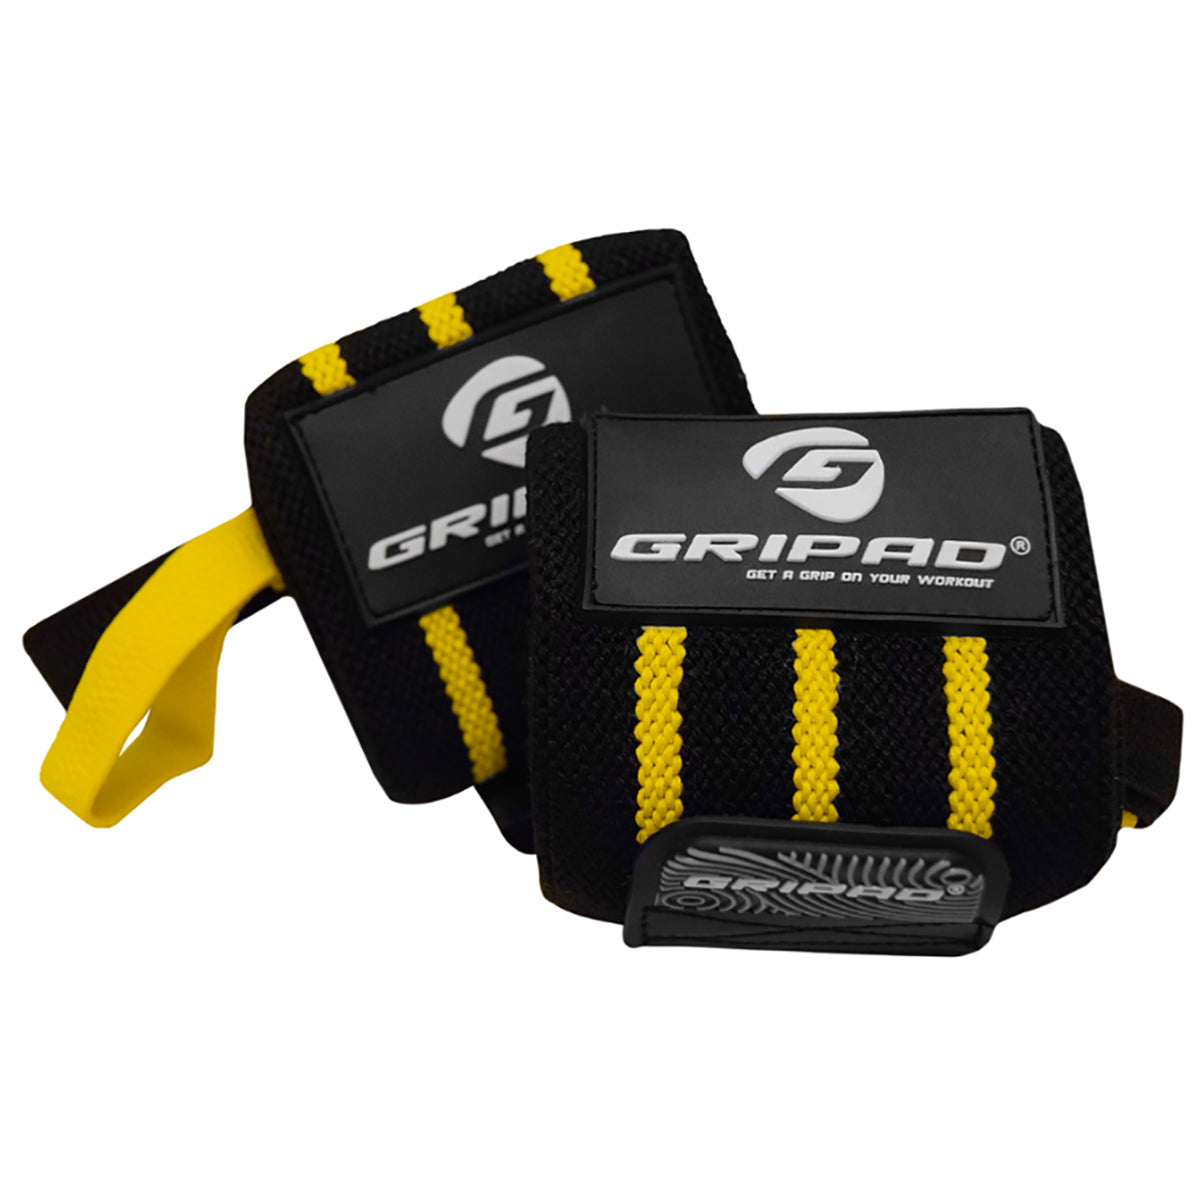 Gripad 12" x 3" Weight Lifting Support Wrist Wraps Gripad